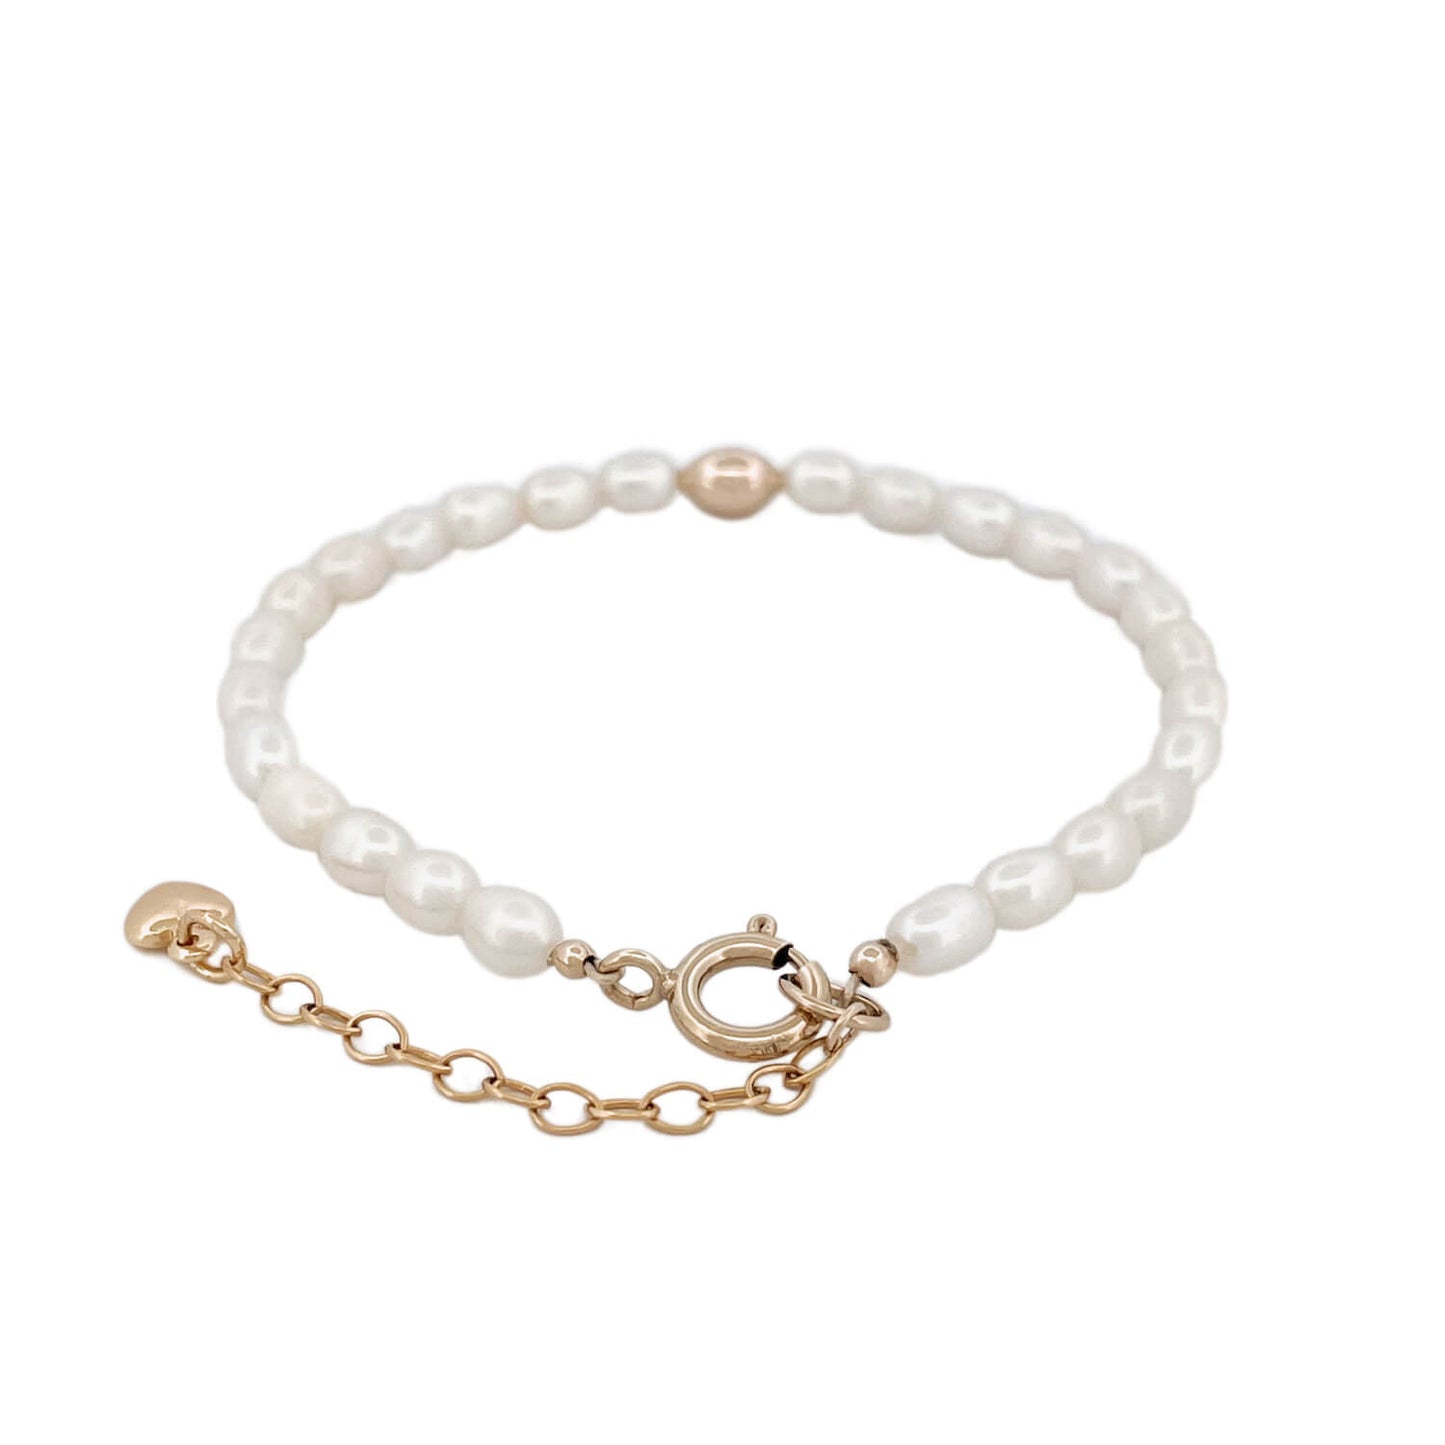 Gray Pearl Bracelet with Adjustable Gold Chain - Keilani– ke aloha jewelry